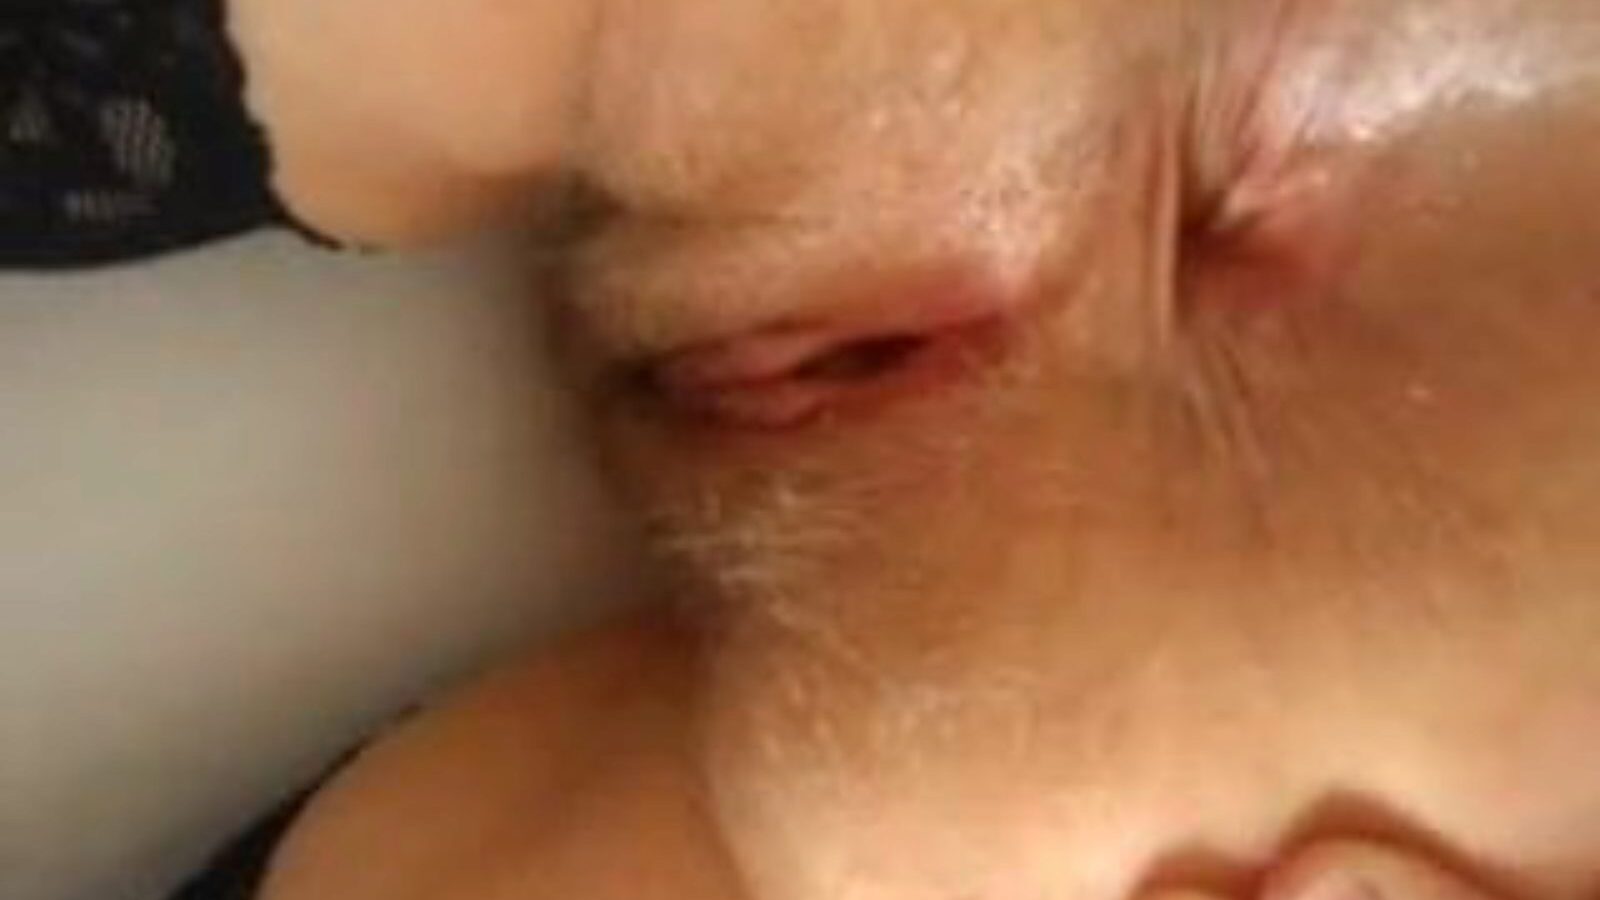 spread ass: spread open & mobile κώλο πορνό βίντεο - η xhamster παρακολουθεί δωρεάν διάθεση ταινίας για βίντεο στο xhamster, με την εκπληκτική έκταση του spread open mobile ass & open asshole porno episode sequences